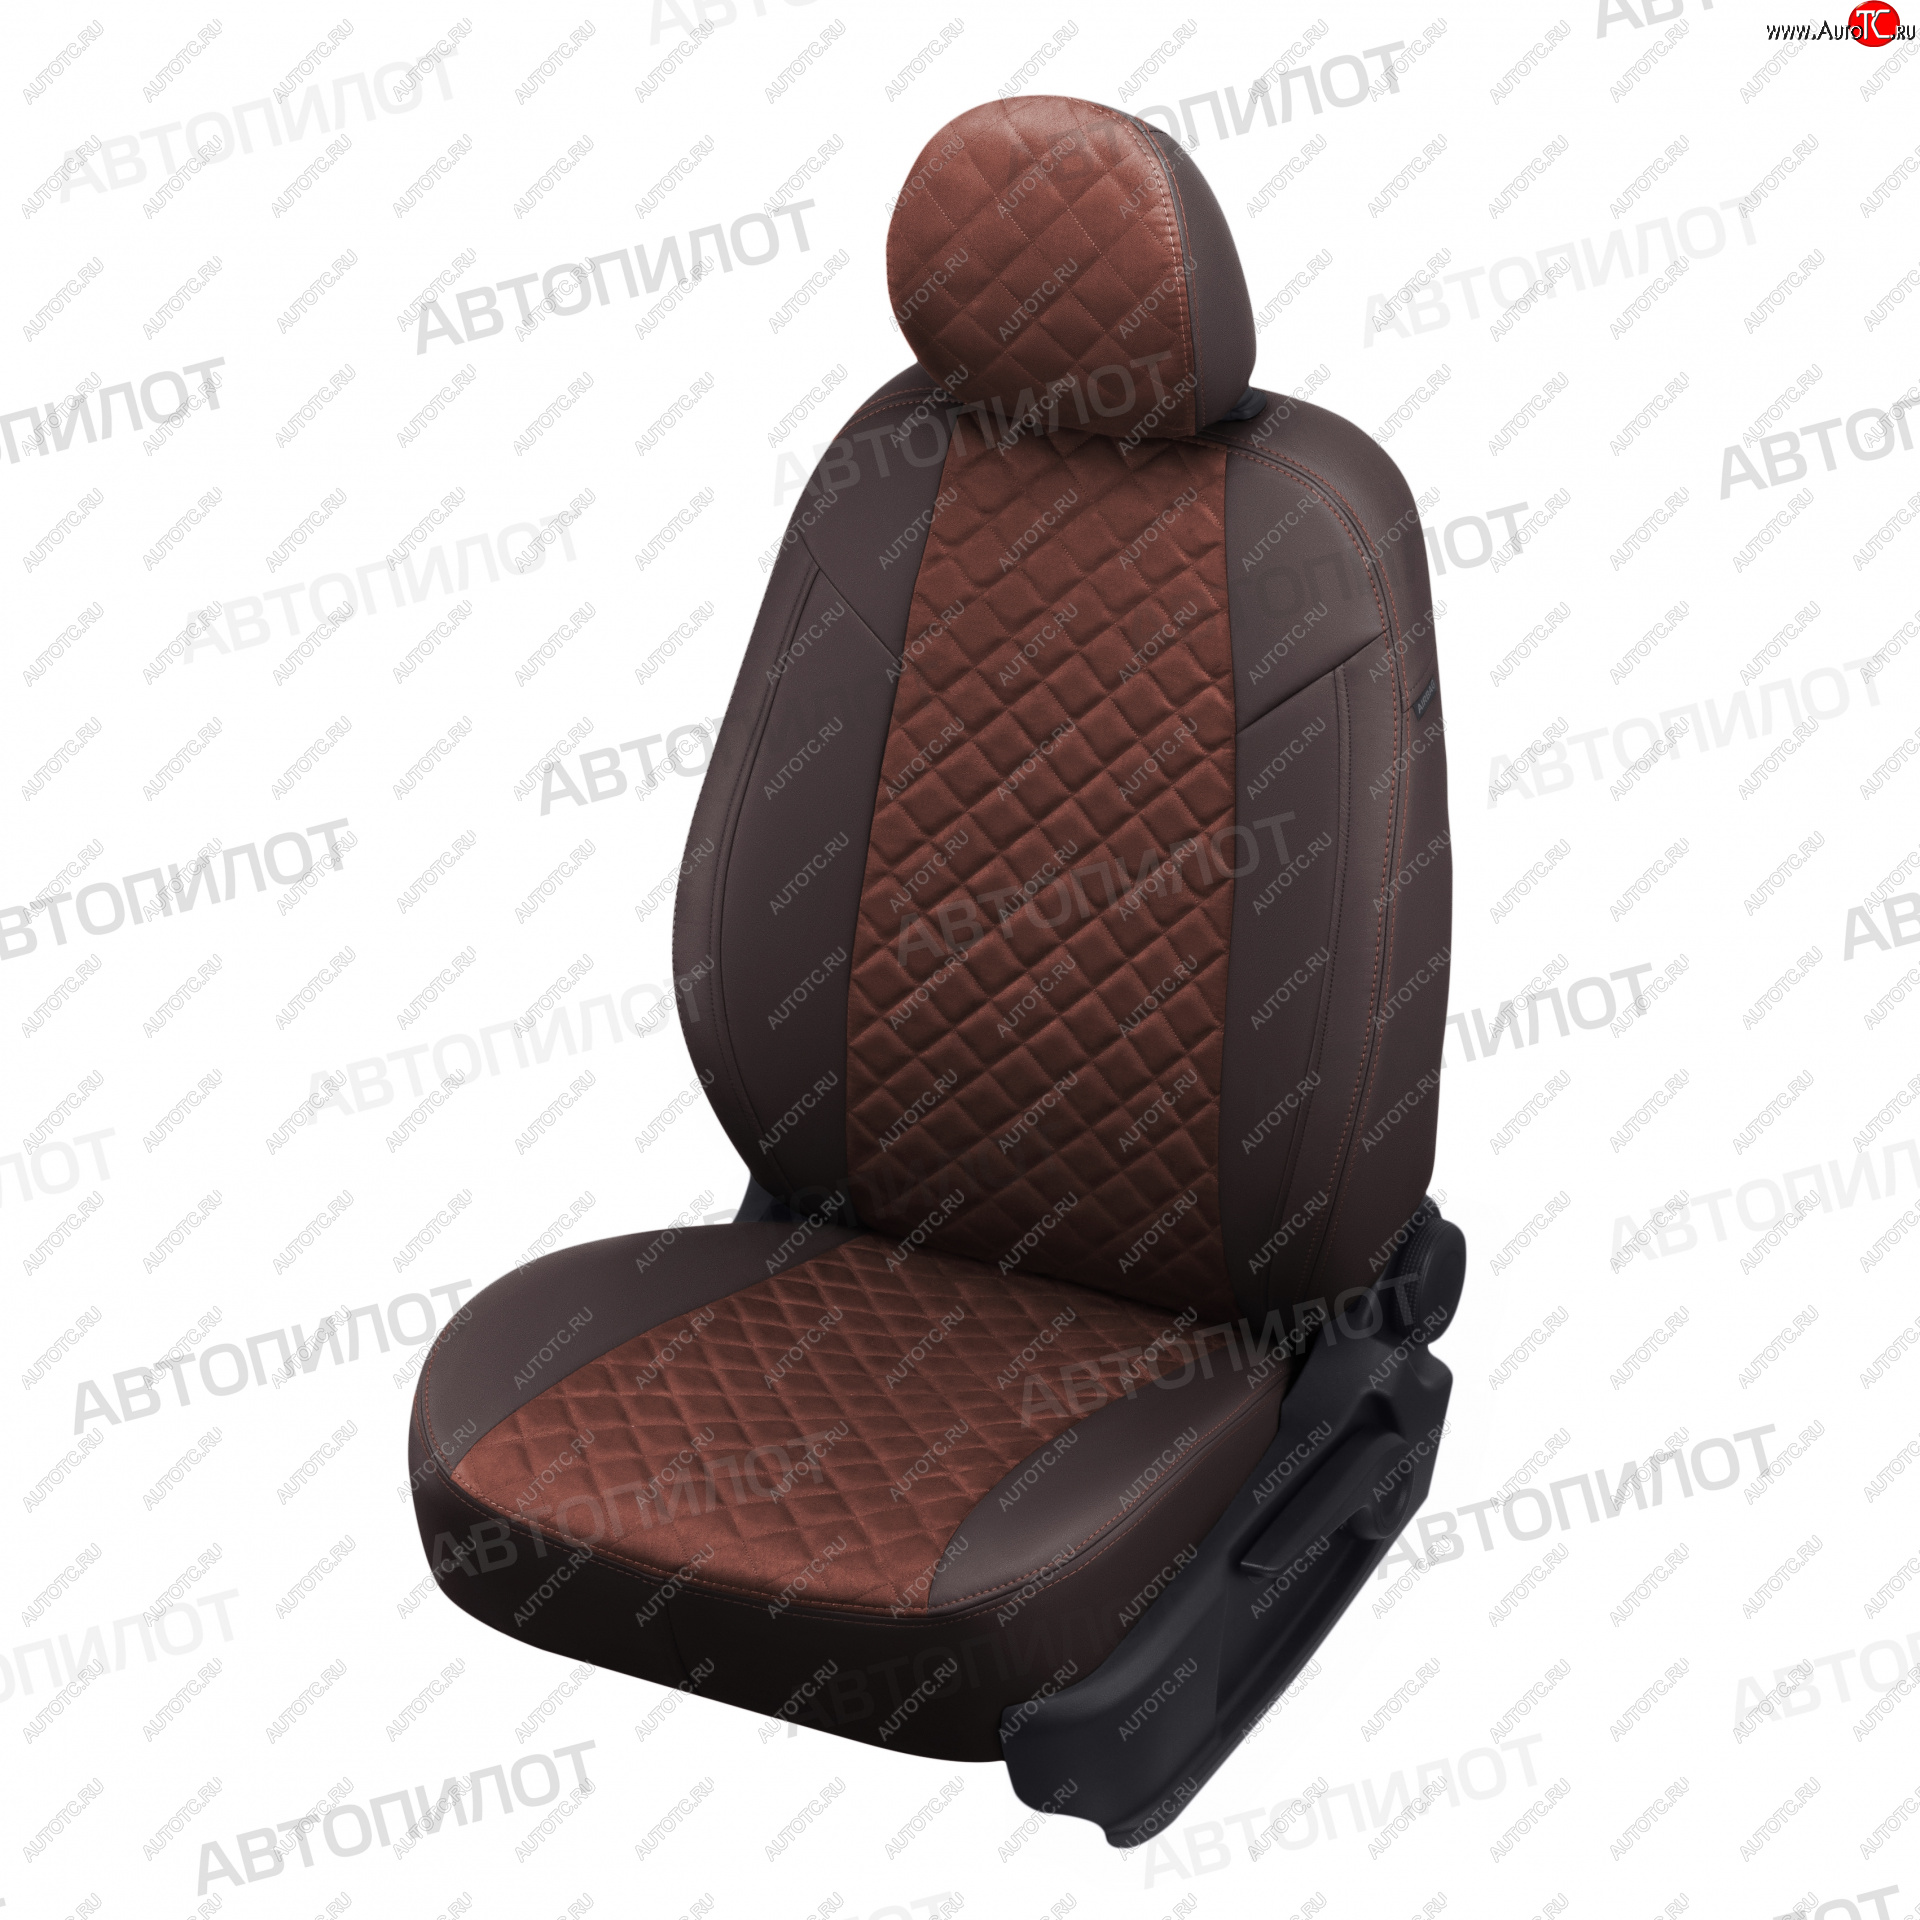 13 999 р. Чехлы сидений (экокожа/алькантара, зад. сид. 40/60) Автопилот Ромб  Hyundai Getz  TB (2002-2010) (шоколад)